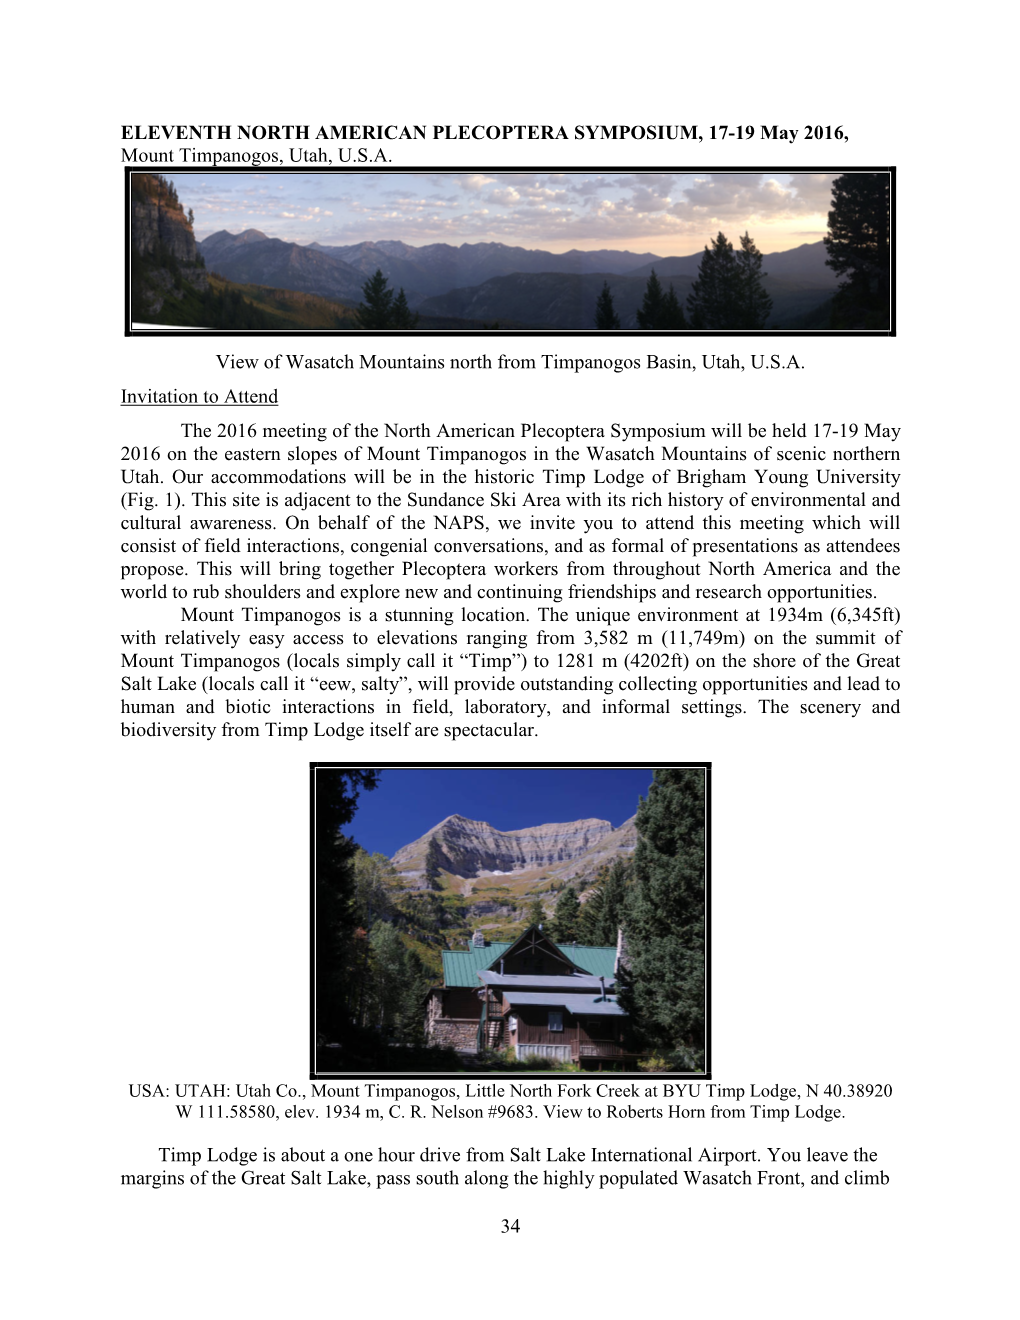 ELEVENTH NORTH AMERICAN PLECOPTERA SYMPOSIUM, 17-19 May 2016, Mount Timpanogos, Utah, U.S.A